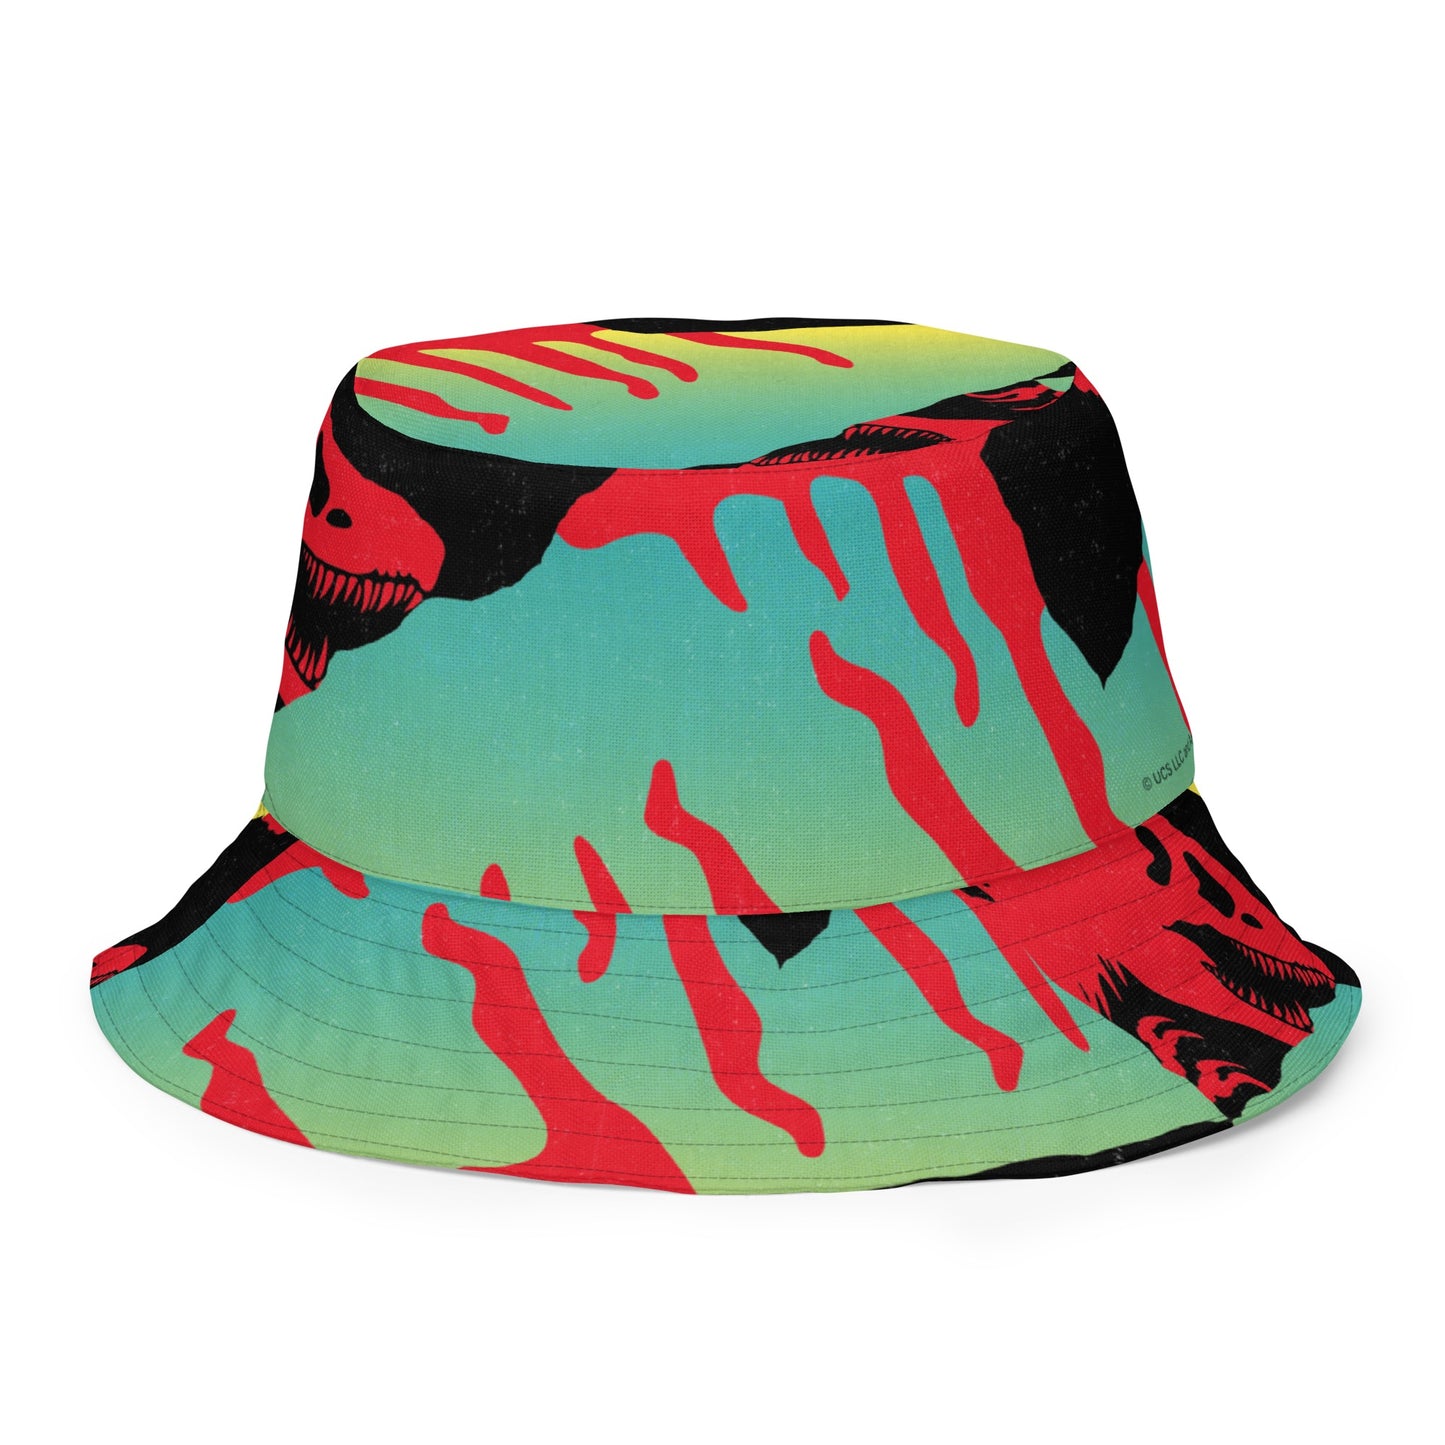 Jurassic Park 30th Anniversary Reversible Bucket Hat